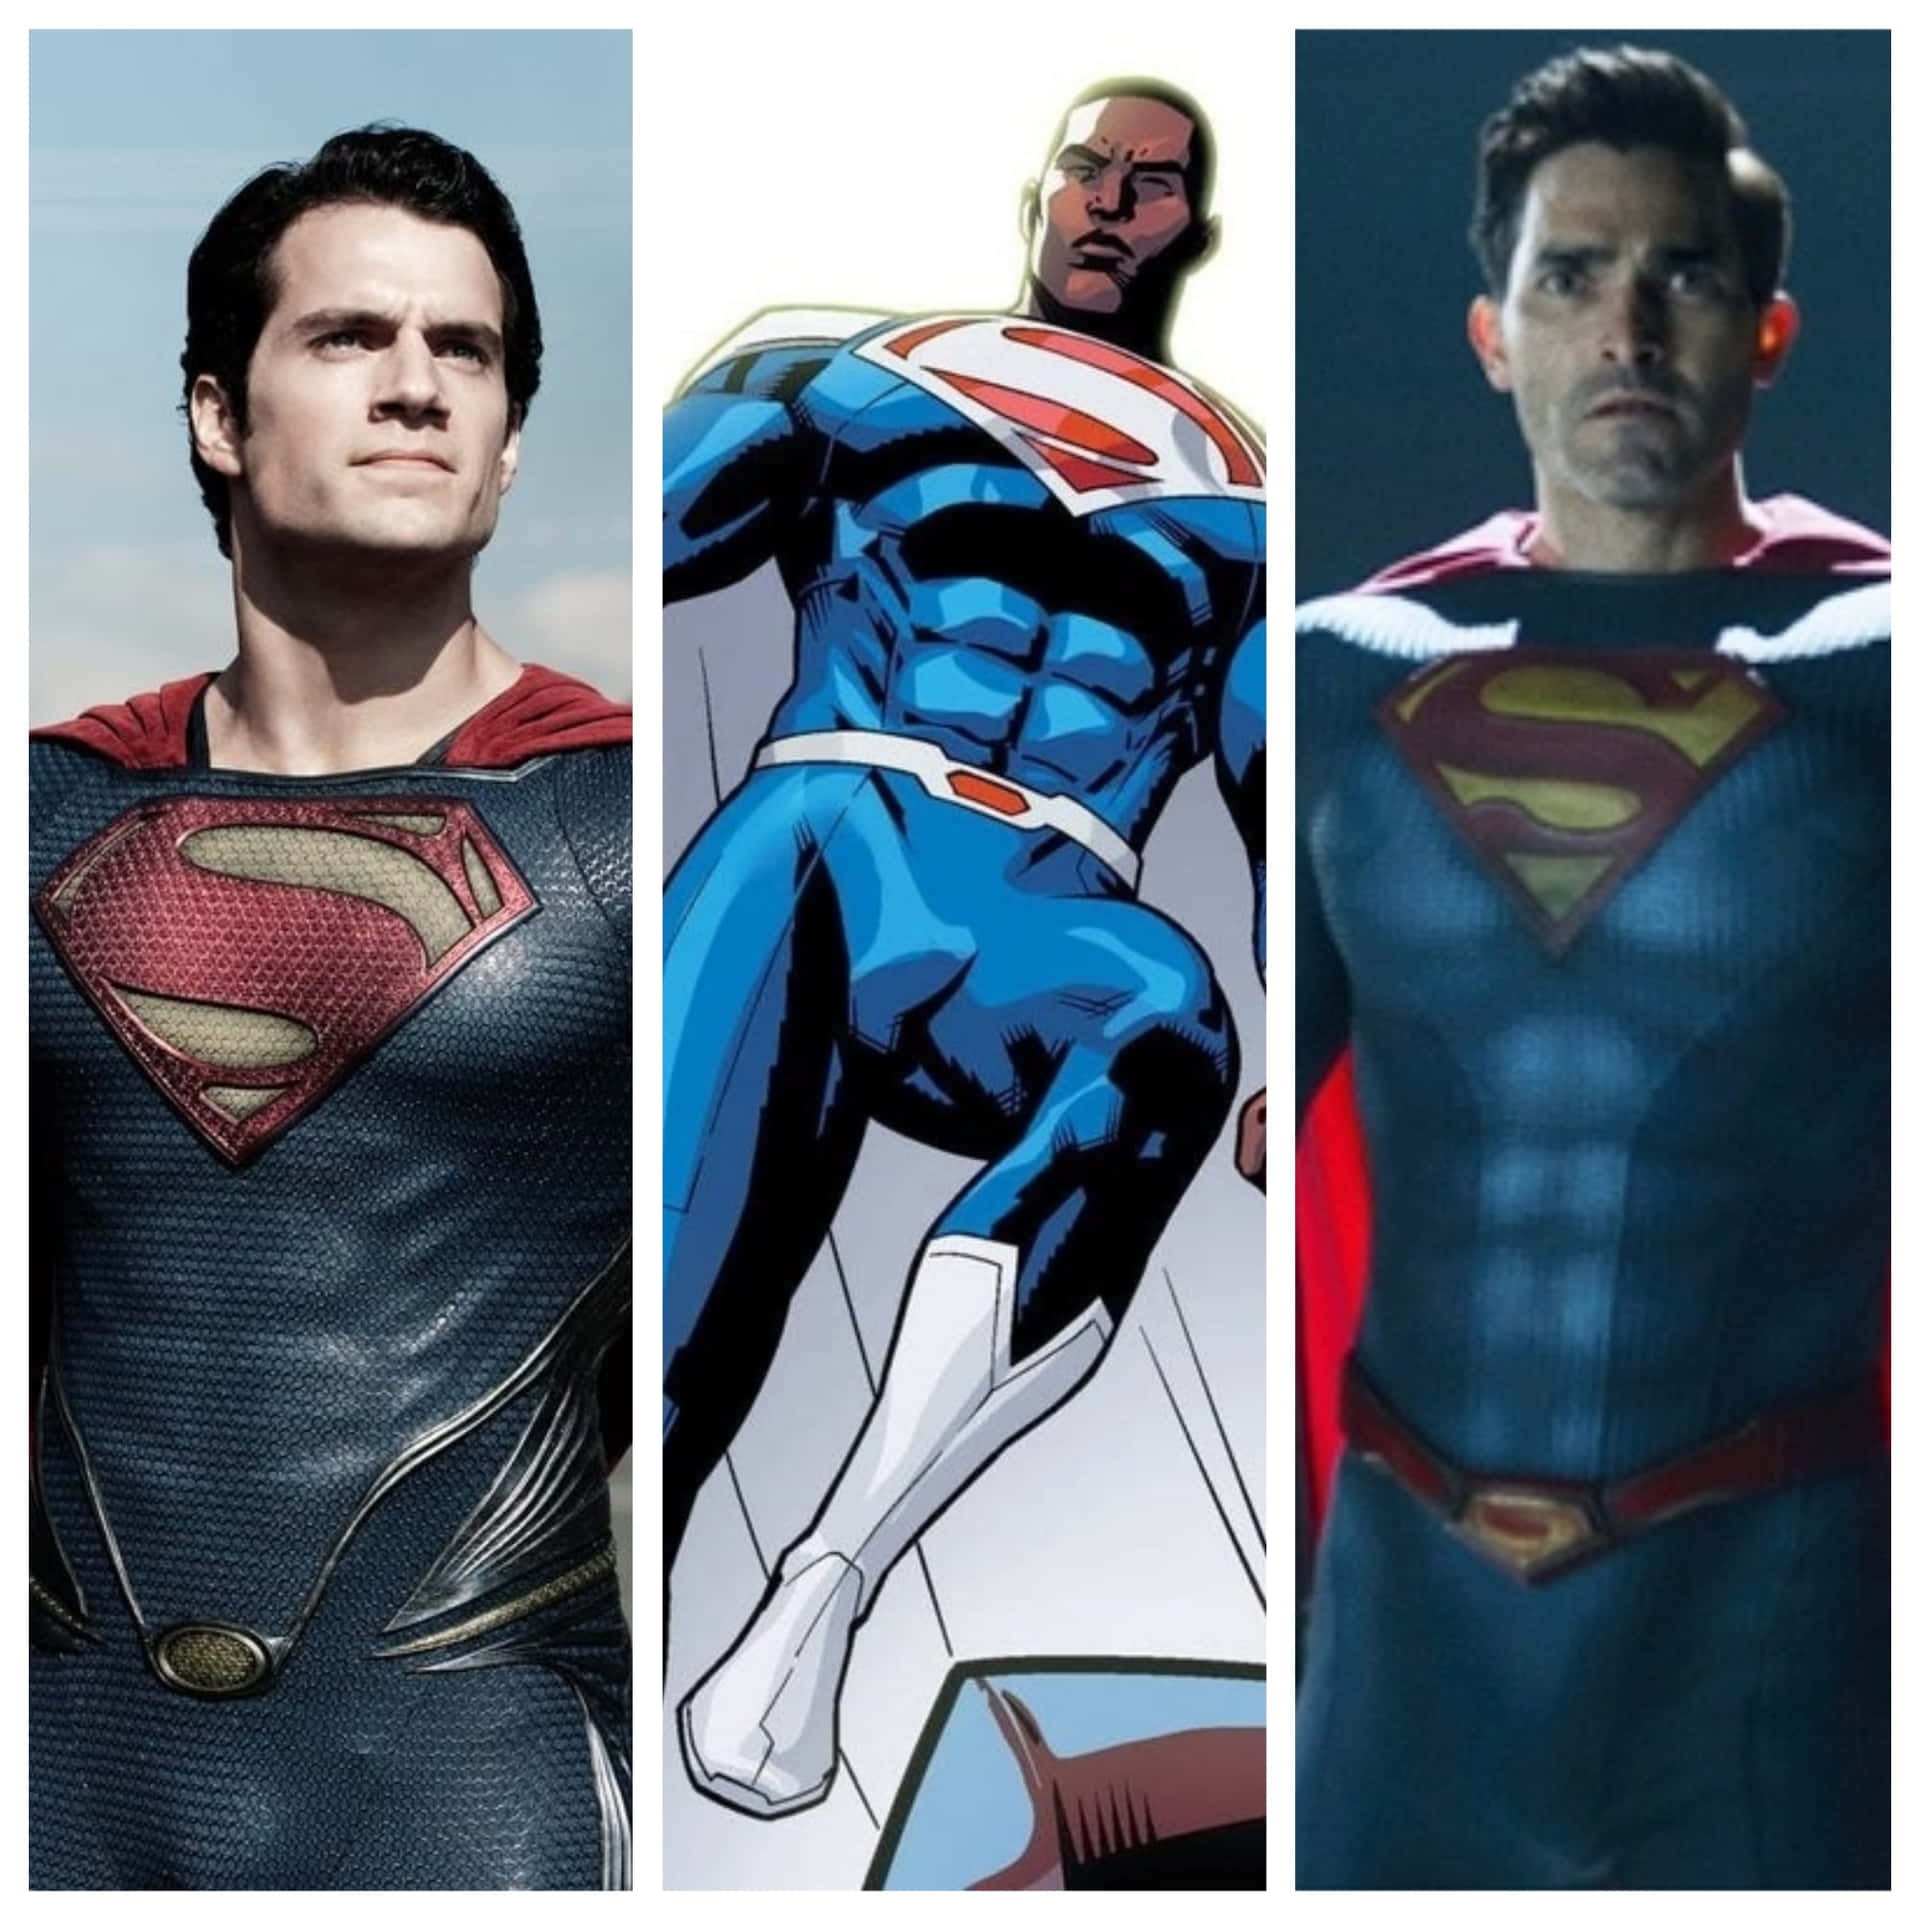 "The Man of Steel - Superman"